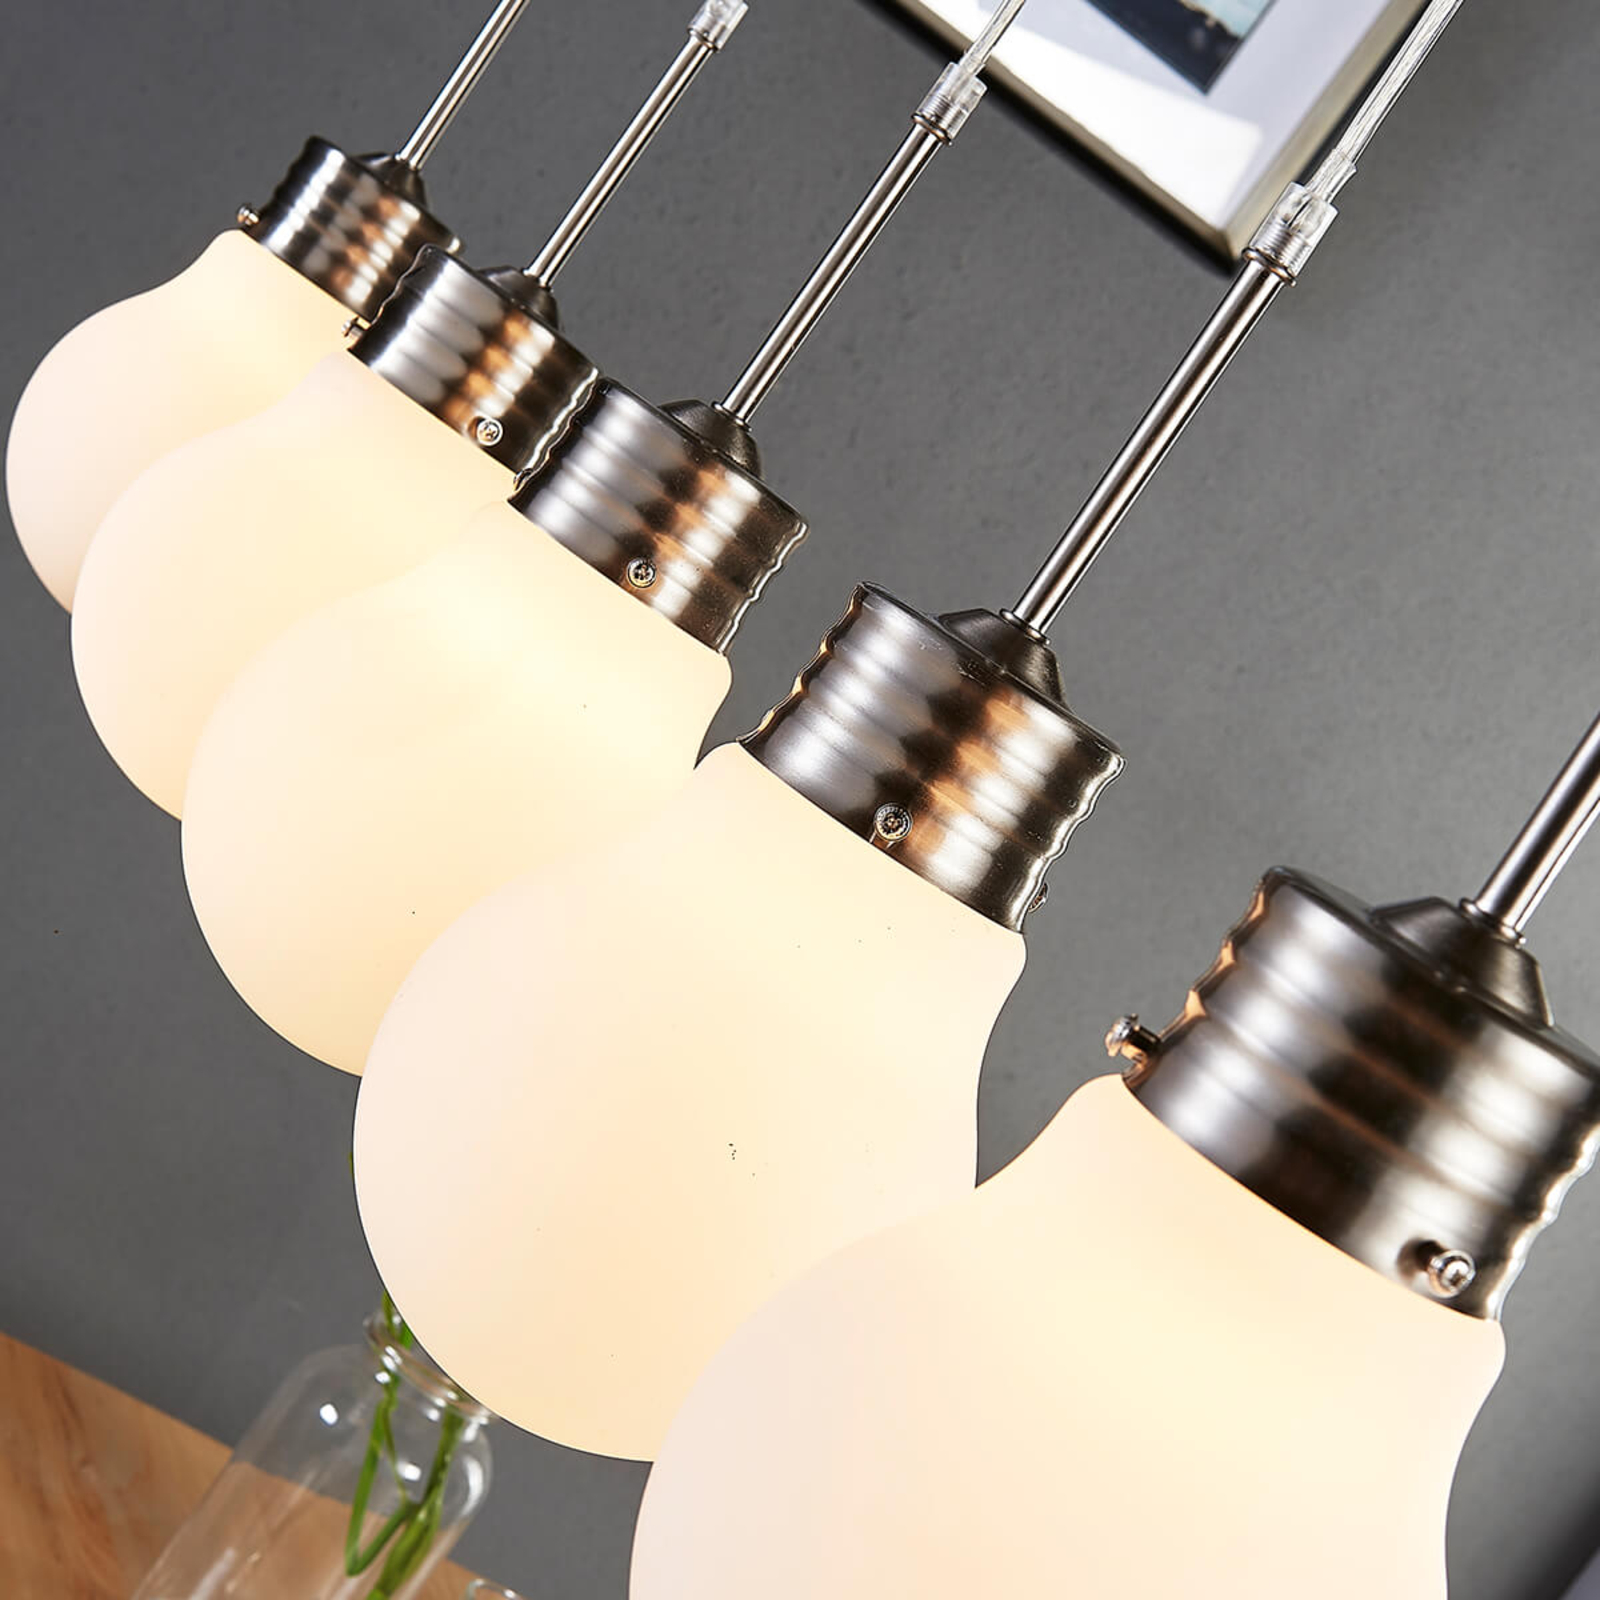 Lindby hanglamp Bado, 5-lamps, metaal, glas, E14, 100 cm